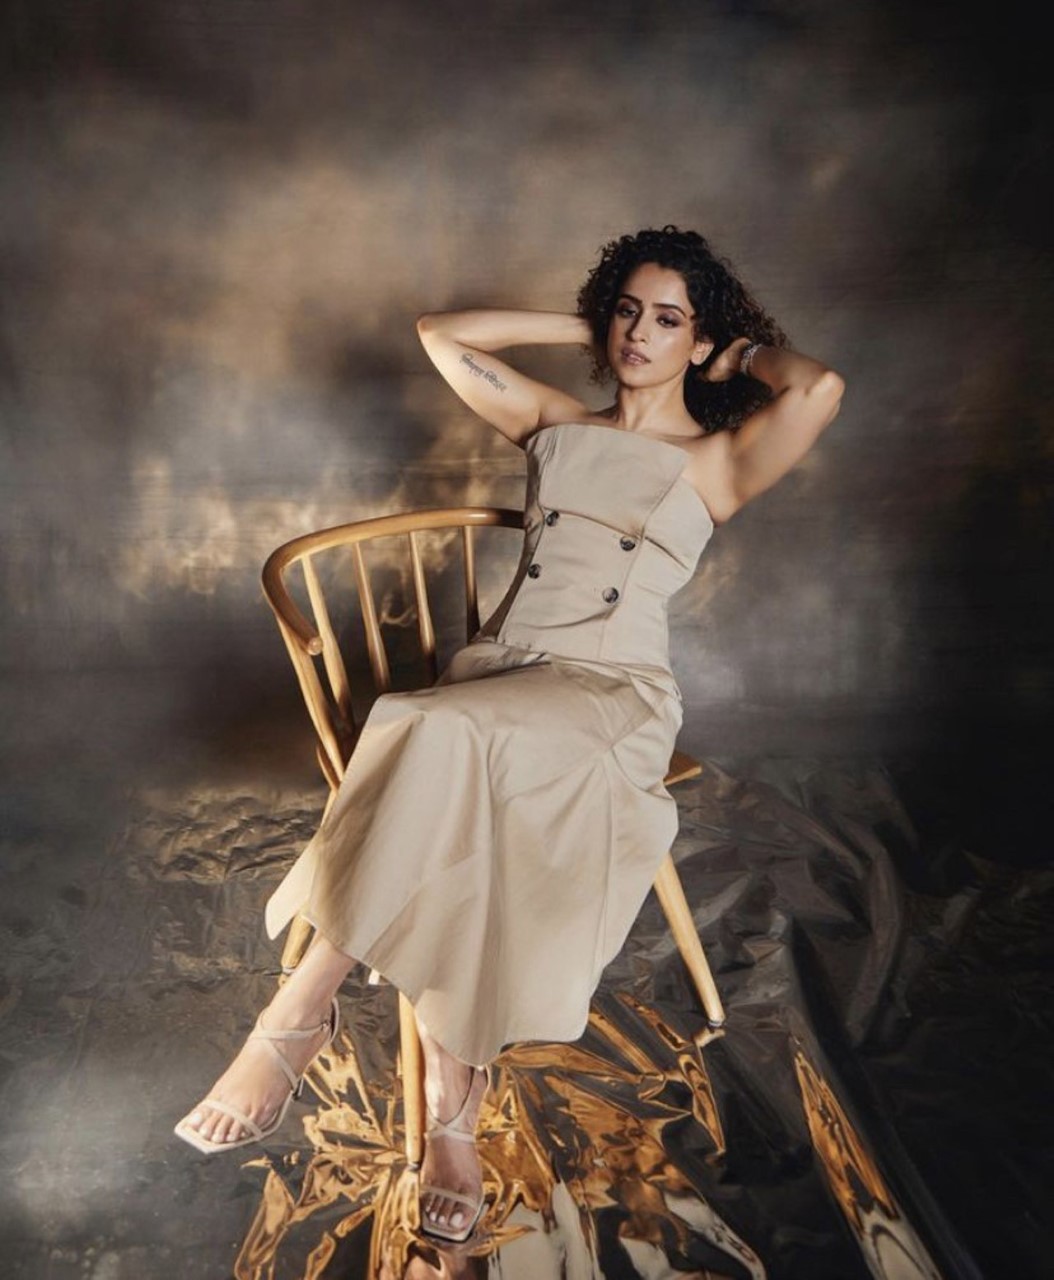 Sanya Malhotra exudes effortless elegance in a beige strapless dress with delicate button details